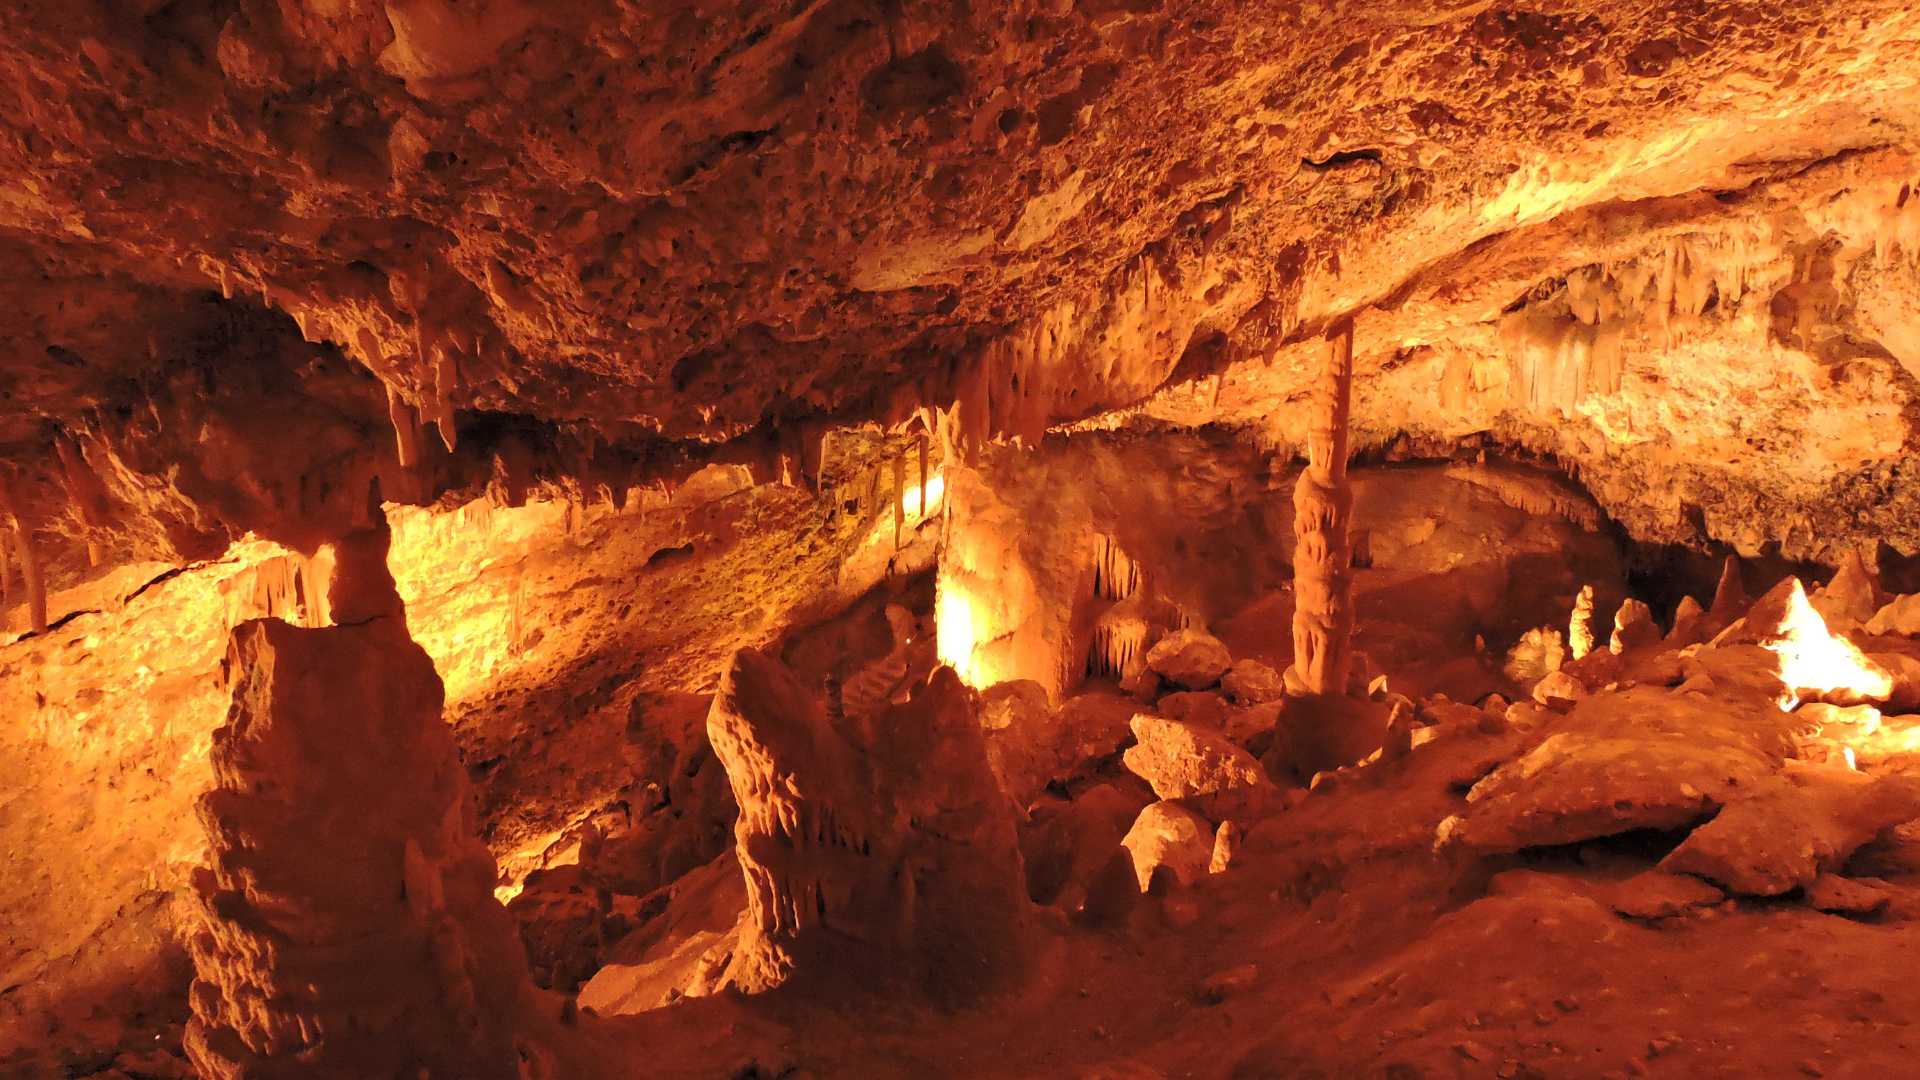 Adéntrate en la Cueva de Don Juan y disfruta de la maravilla natural